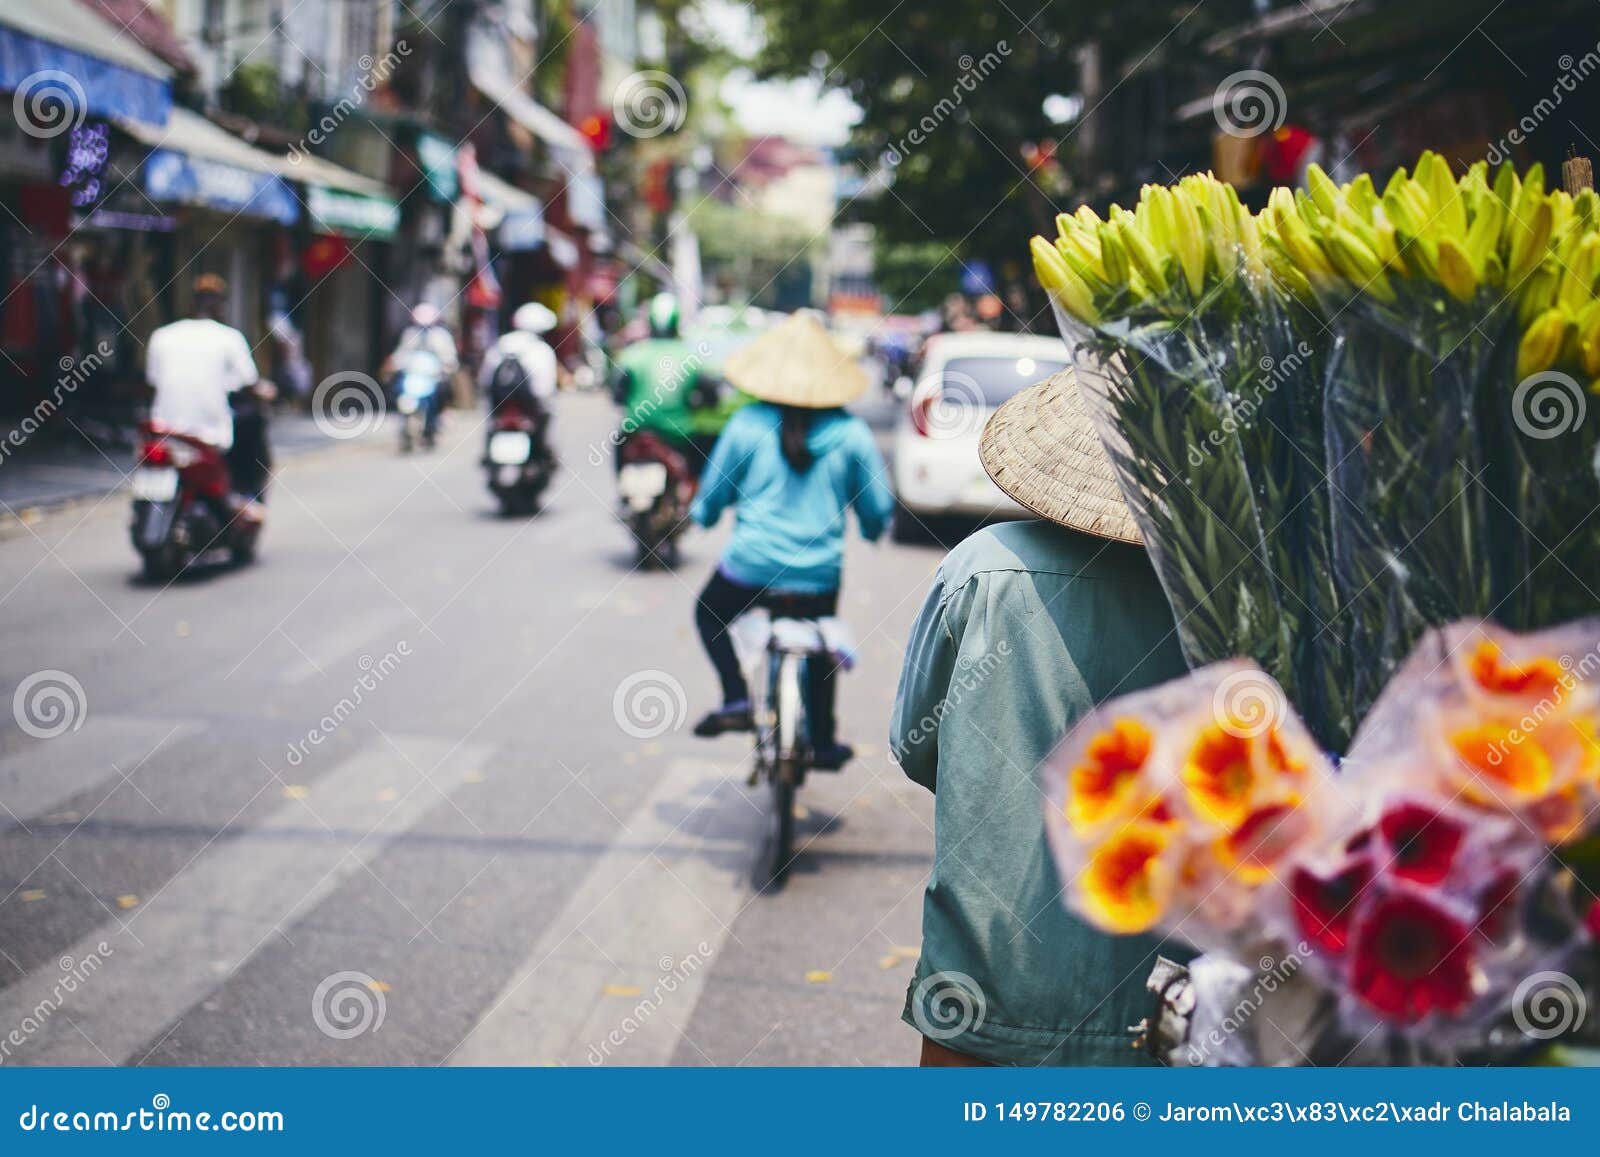 busy street in hanoi